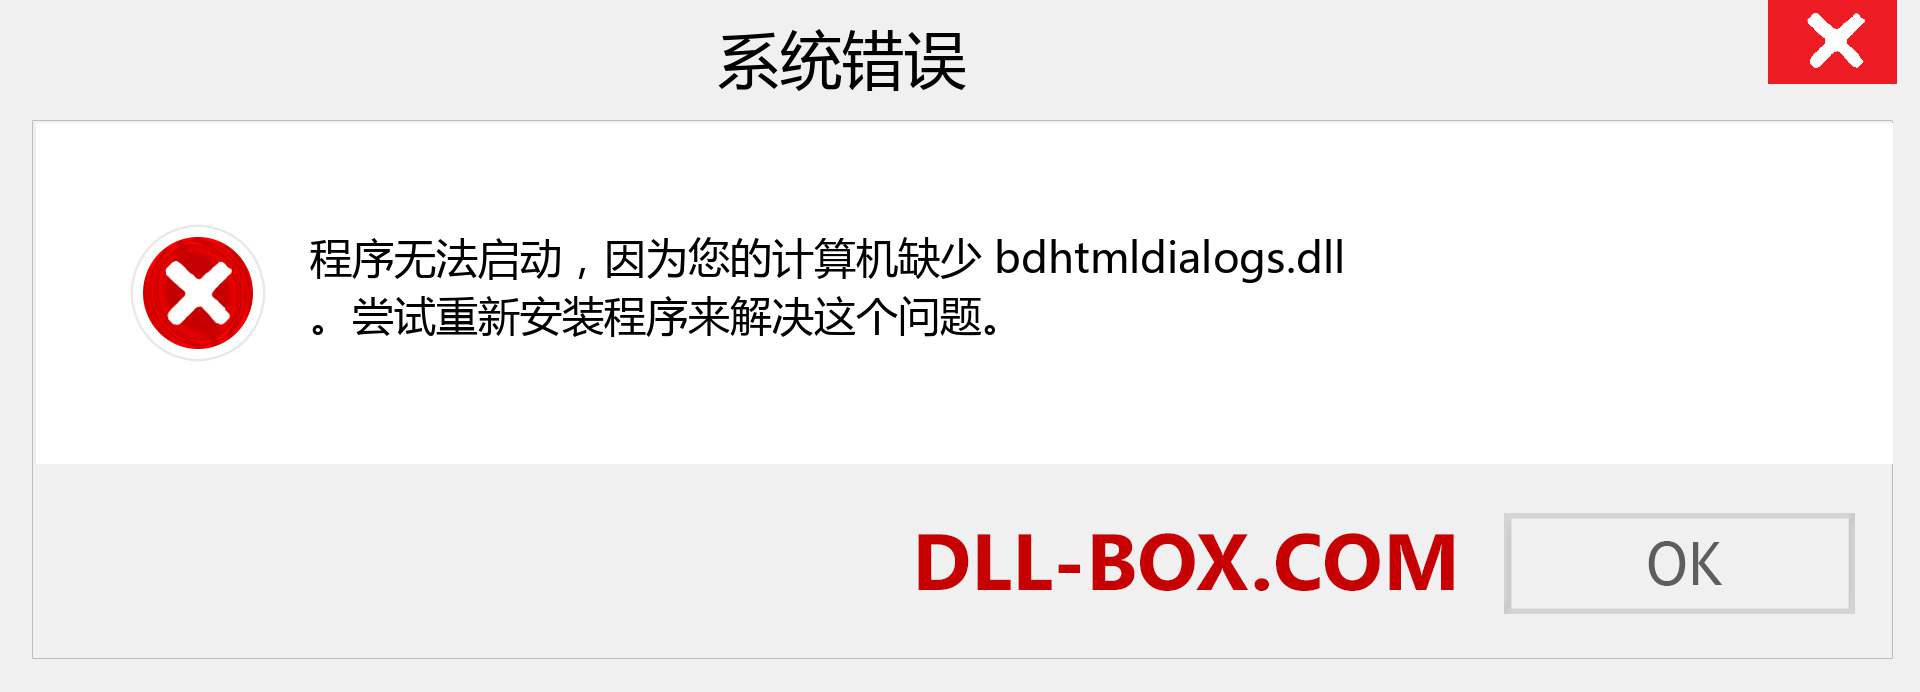 bdhtmldialogs.dll 文件丢失？。 适用于 Windows 7、8、10 的下载 - 修复 Windows、照片、图像上的 bdhtmldialogs dll 丢失错误